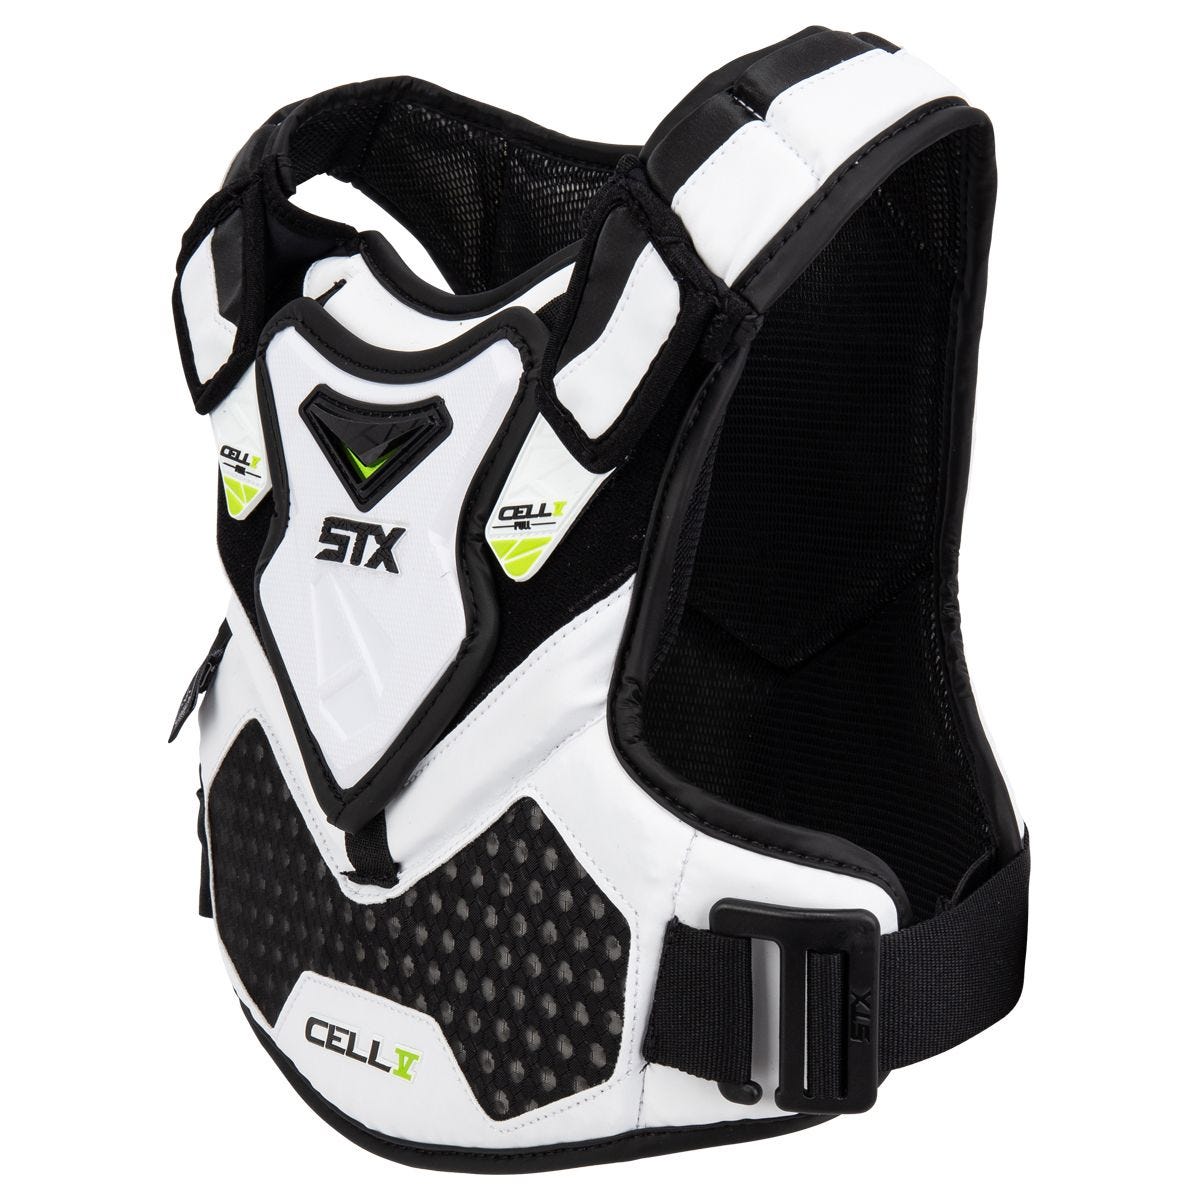 STX Cell VI Lacrosse Shoulder Pad